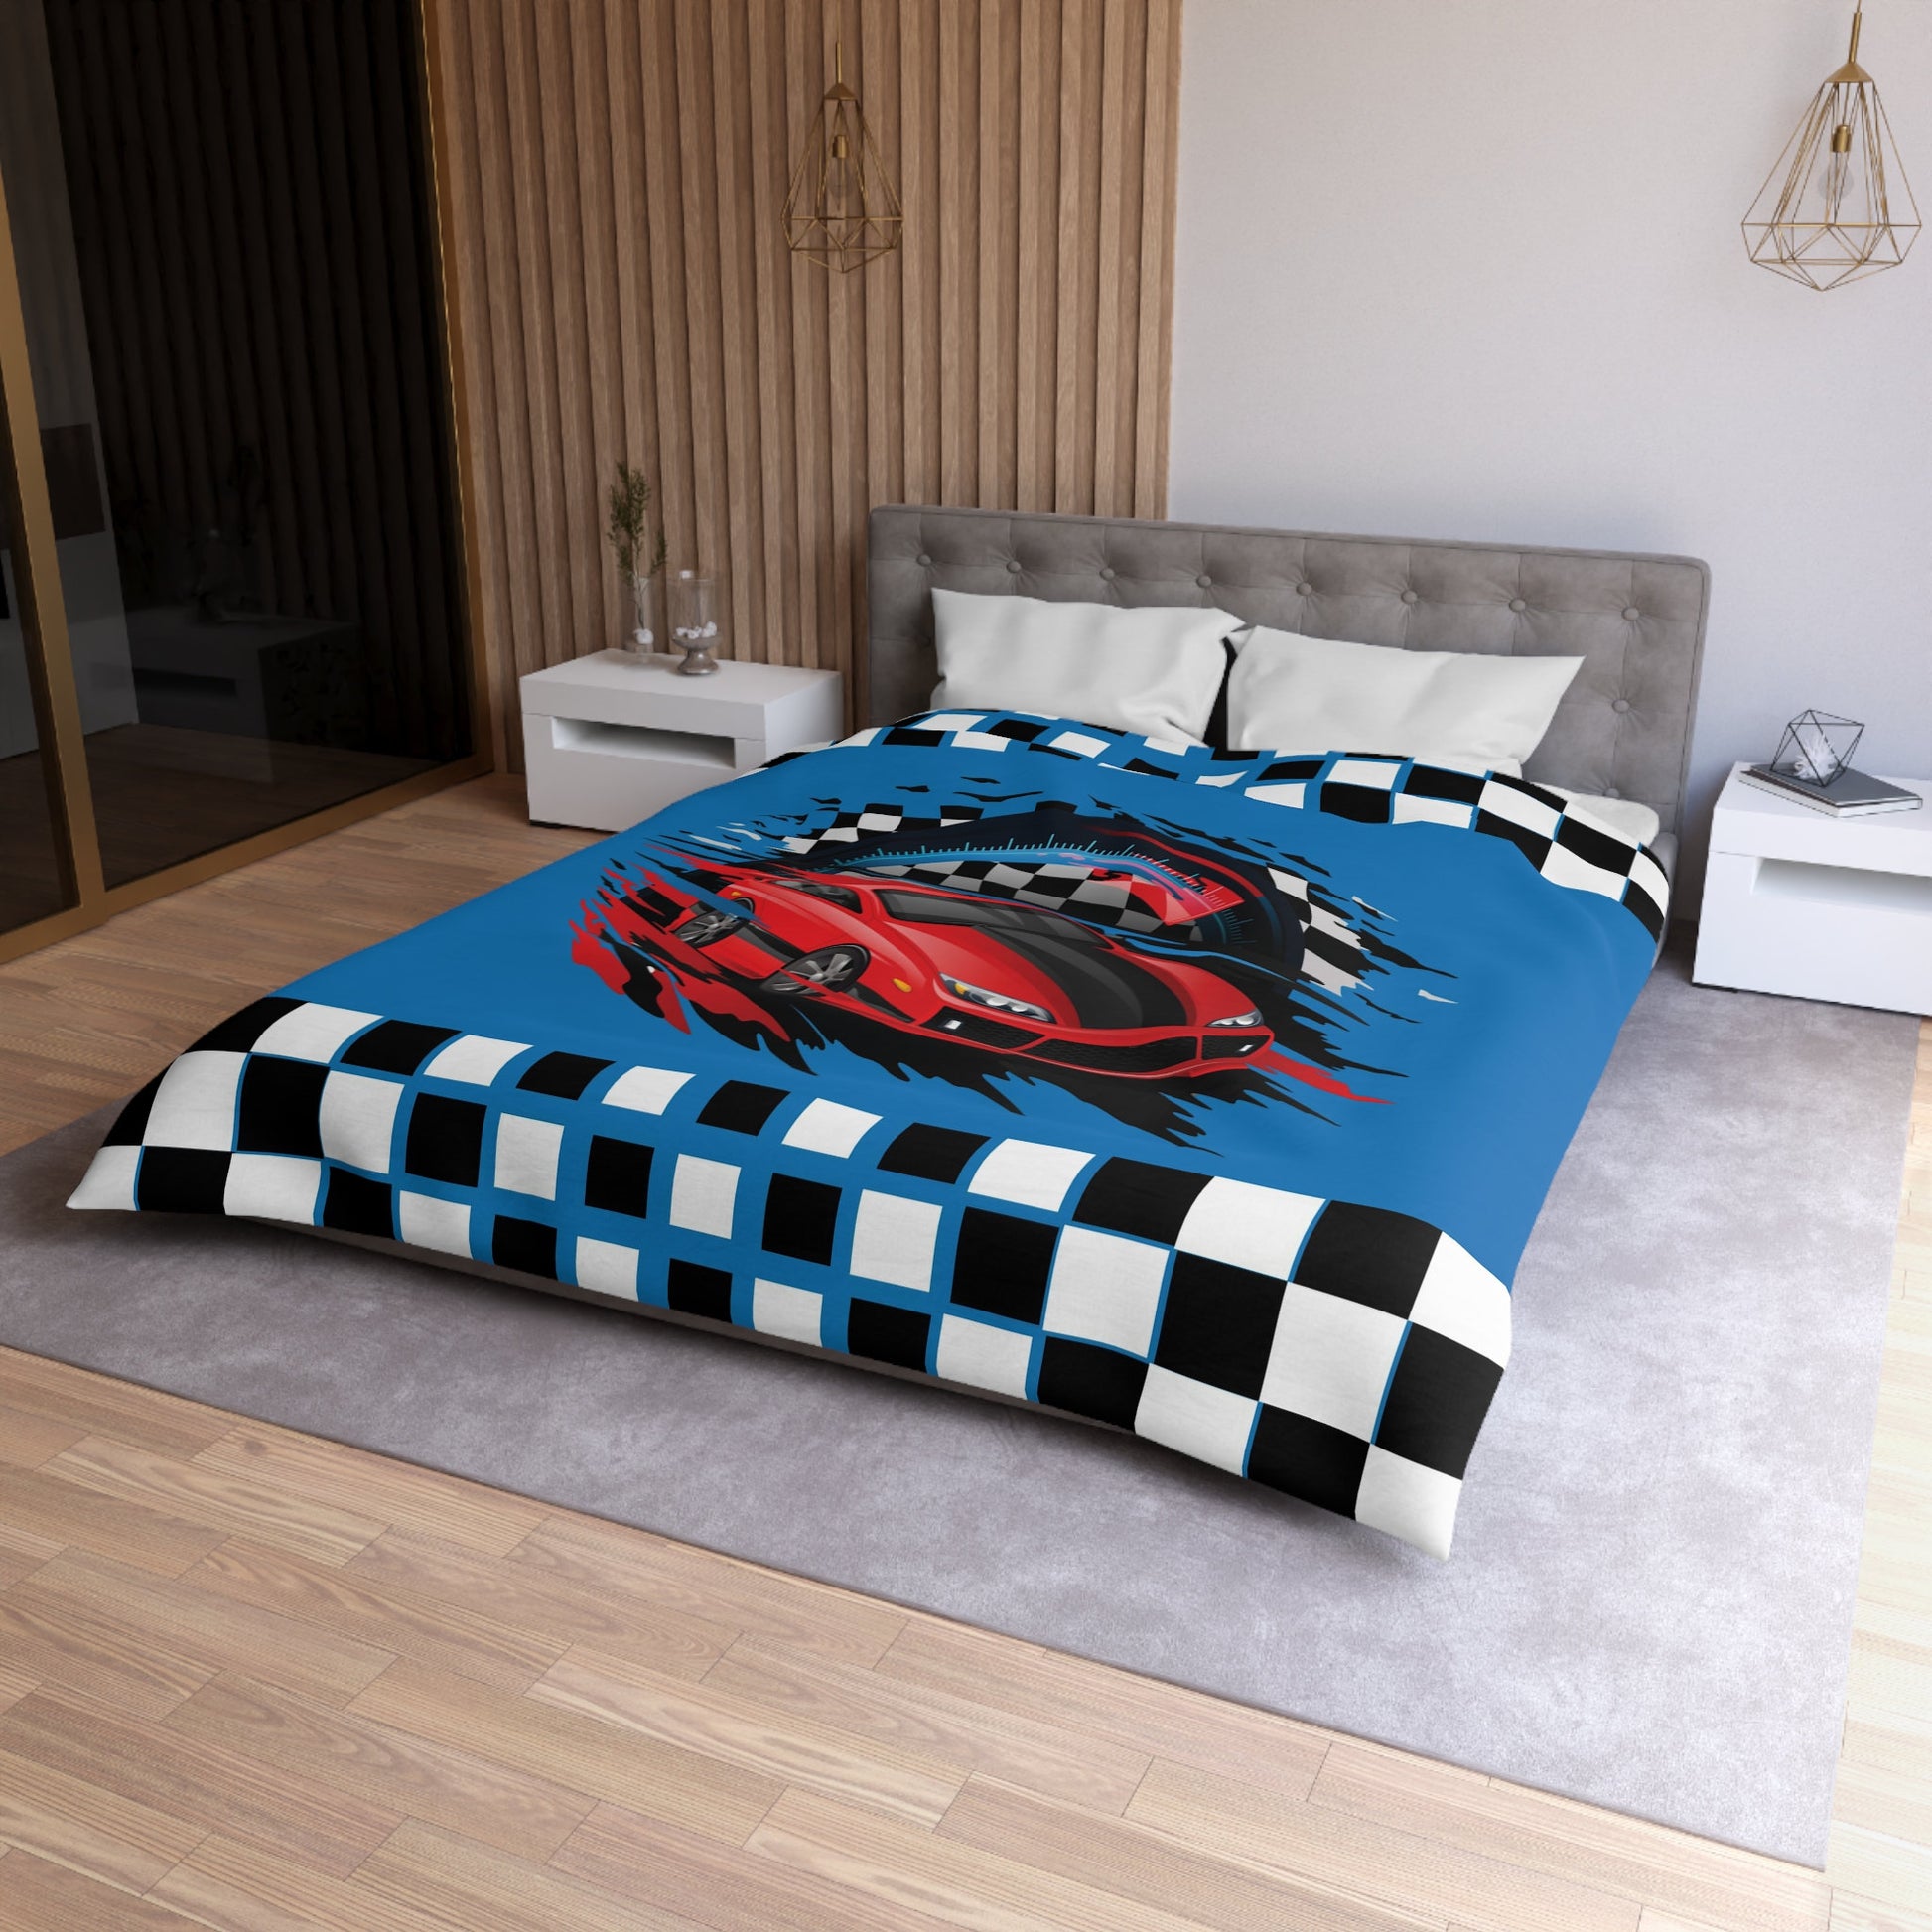 Car Racing Comforter or Duvet Cover kids bedding racetrack themed bedroom